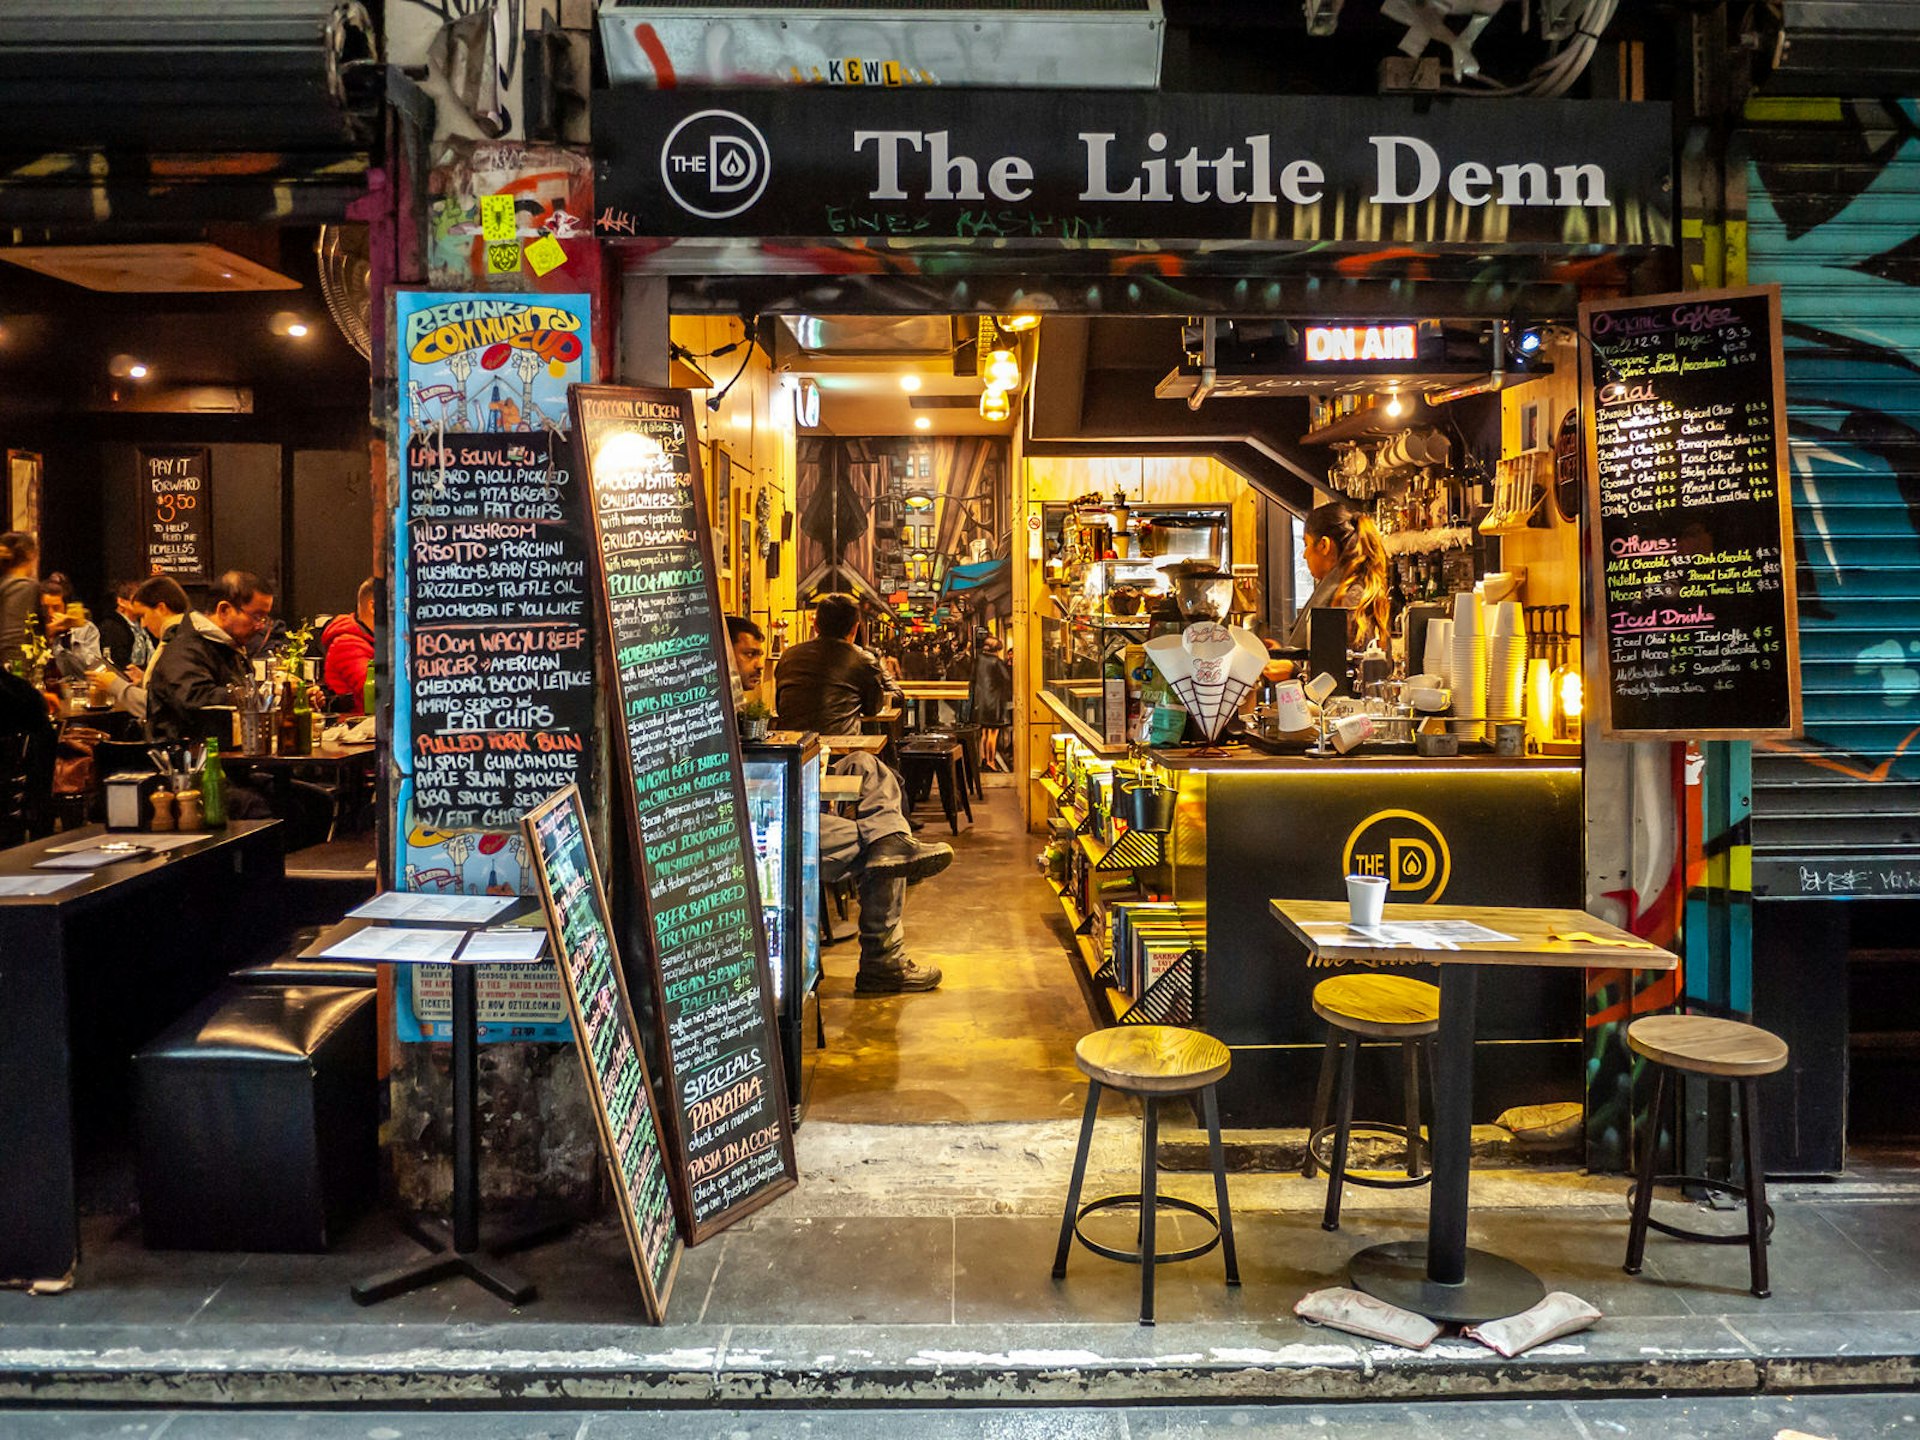 The Little Denn cafe in Melbourne